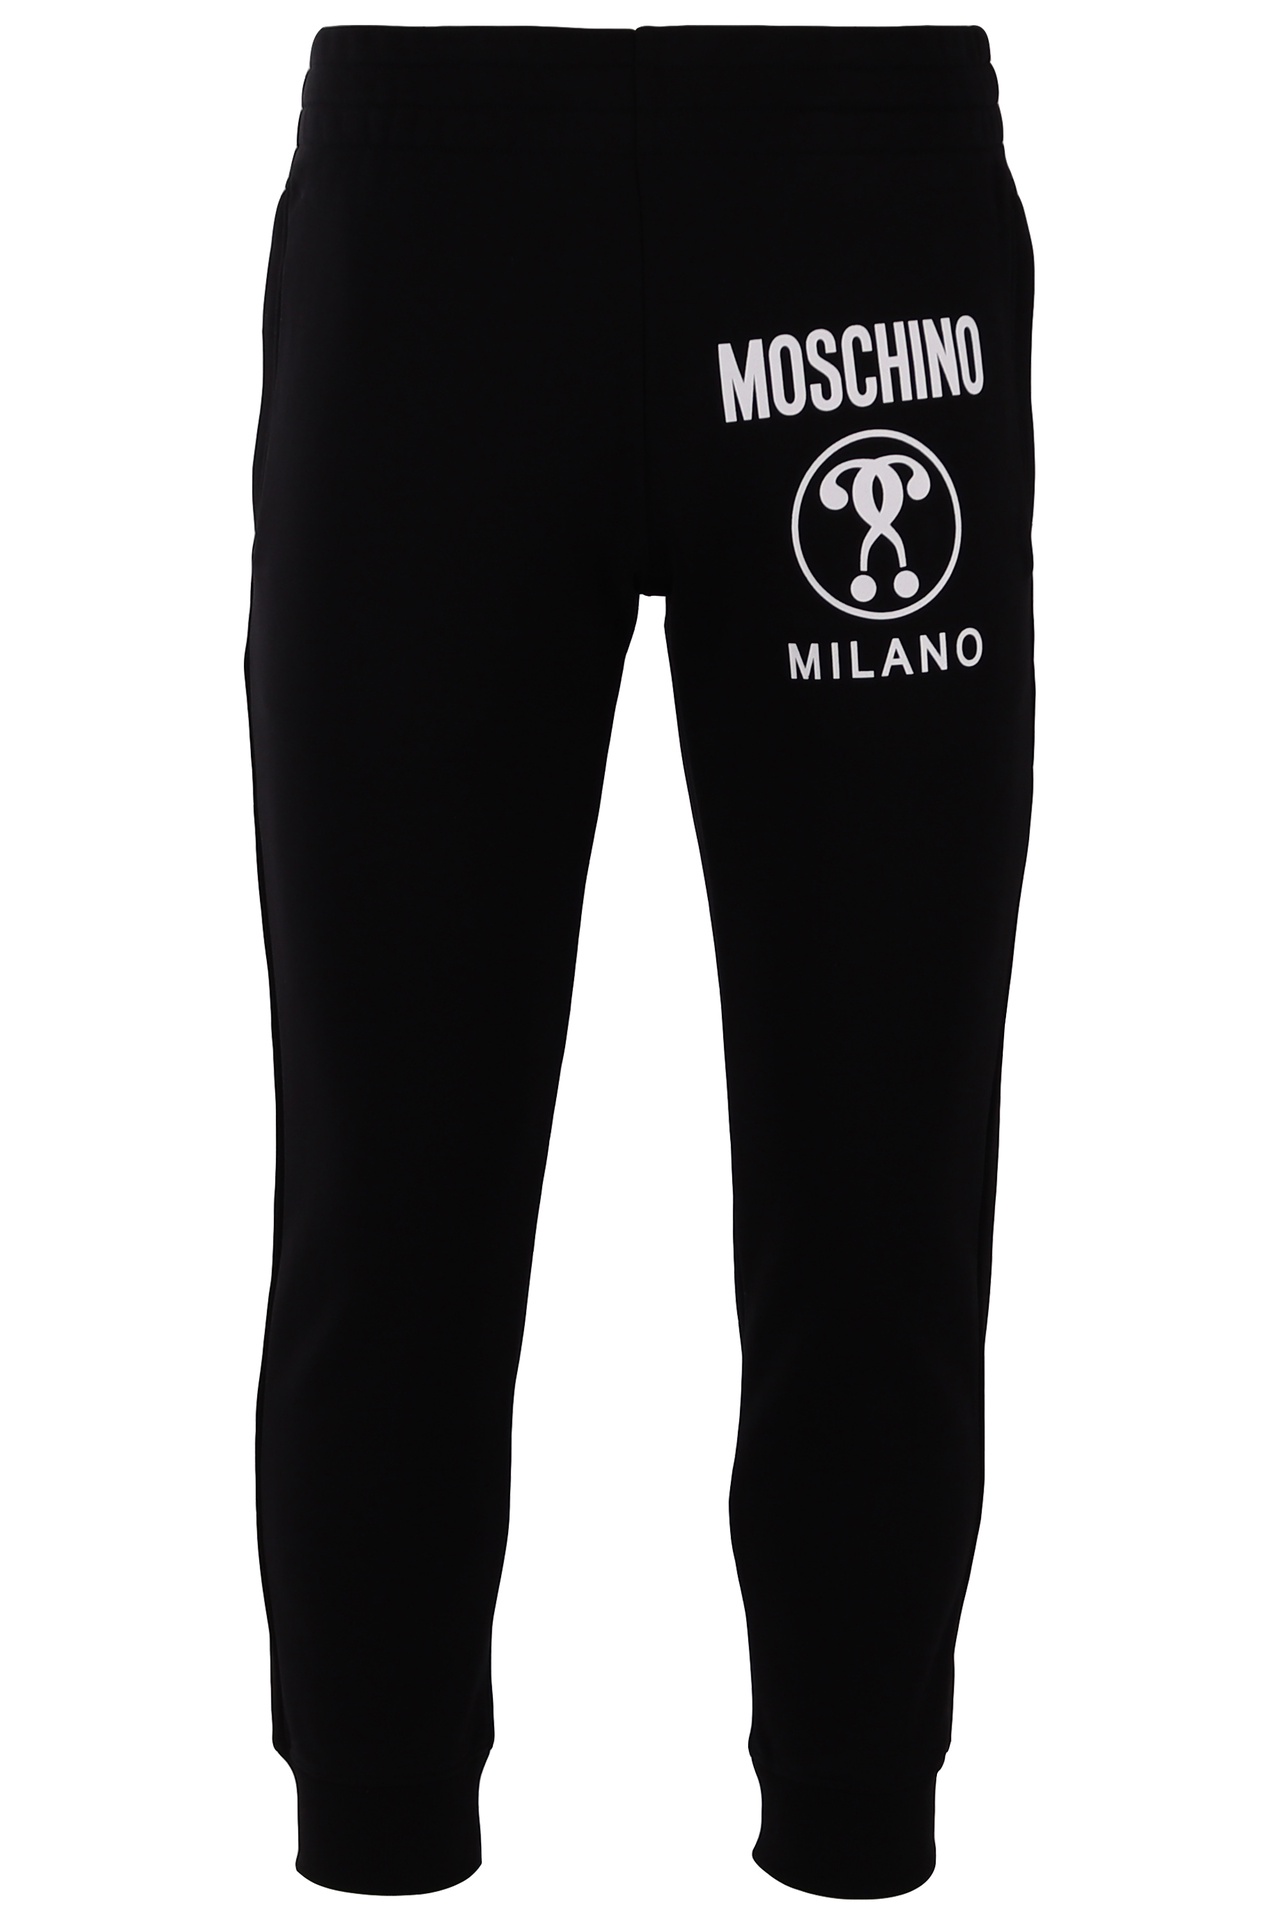 Moschino - Pantalón Moschino Couture negro con grande - Fashion